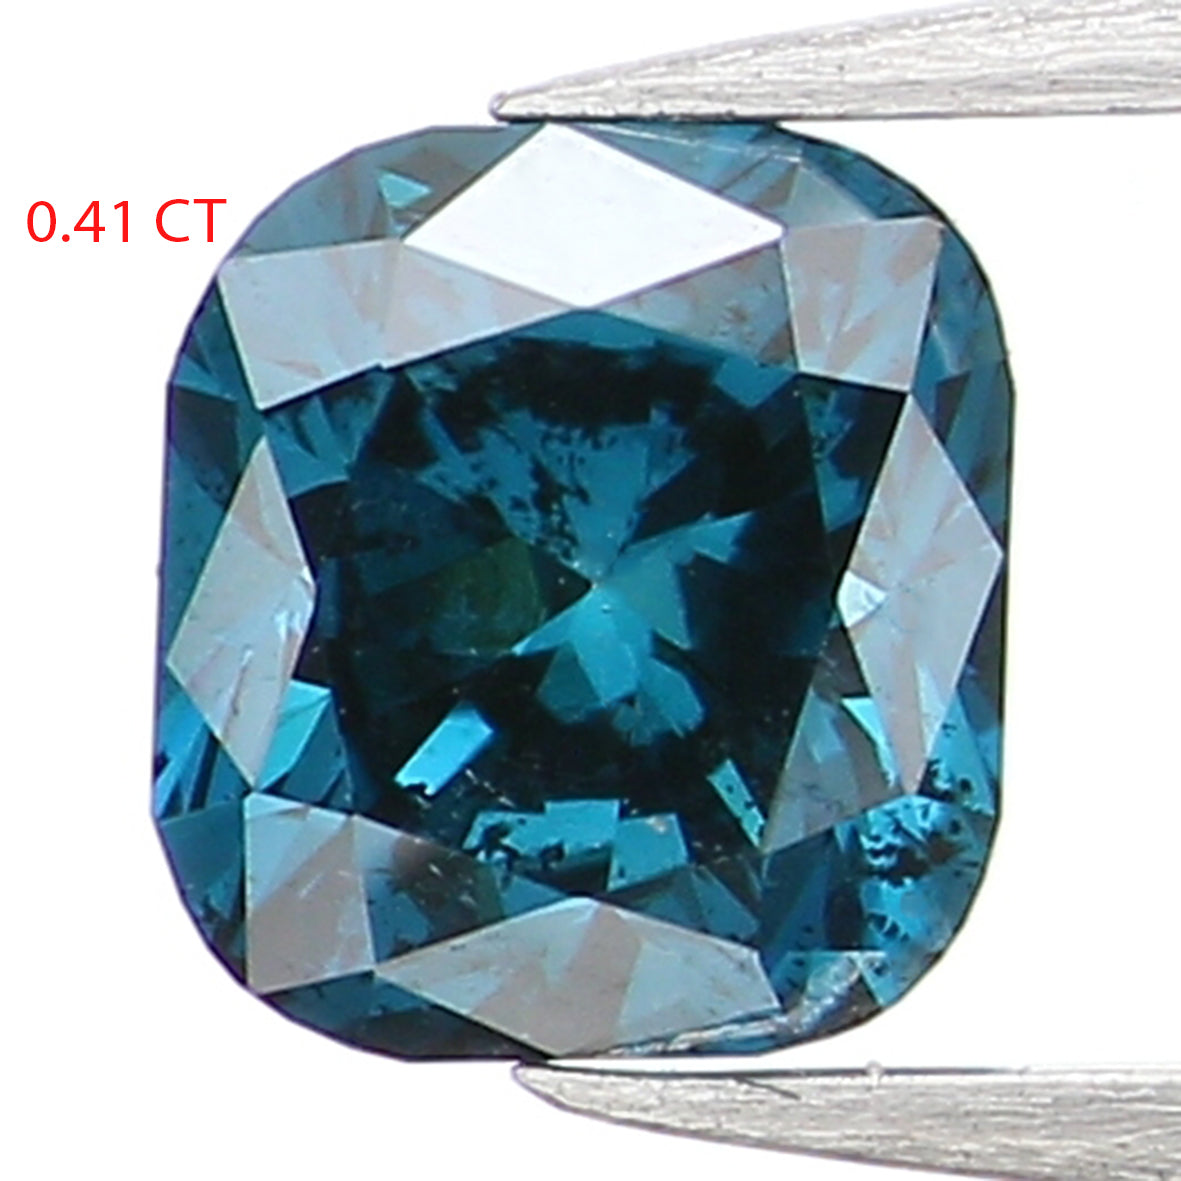 0.41 Ct Natural Loose Diamond, Cushion Diamond, Blue Diamond, Polished Diamond, Brilliant Cut Diamond, Rustic Diamond, Antique Diamond L860